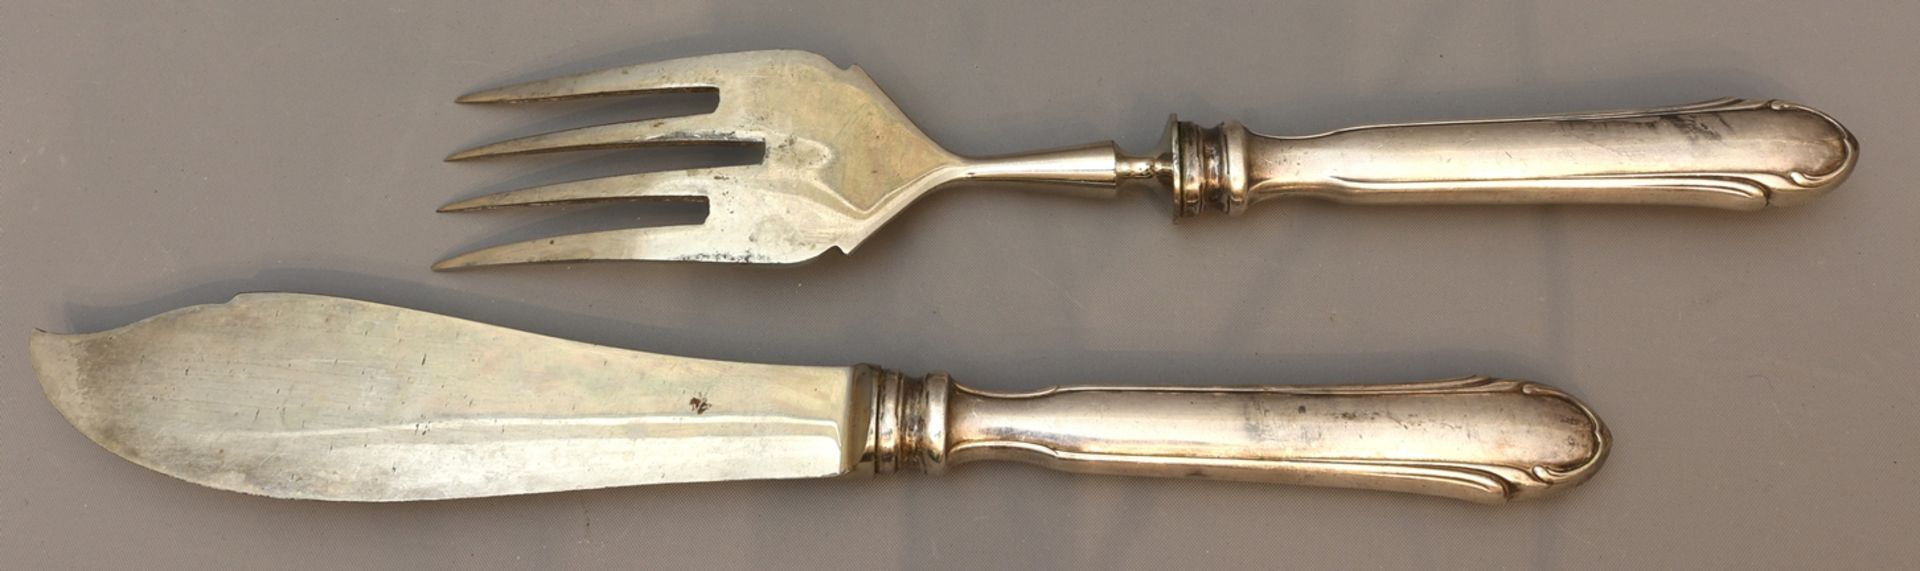 Baroque style serving cutlery, Historicism circa 1900-1920, German - Image 2 of 2